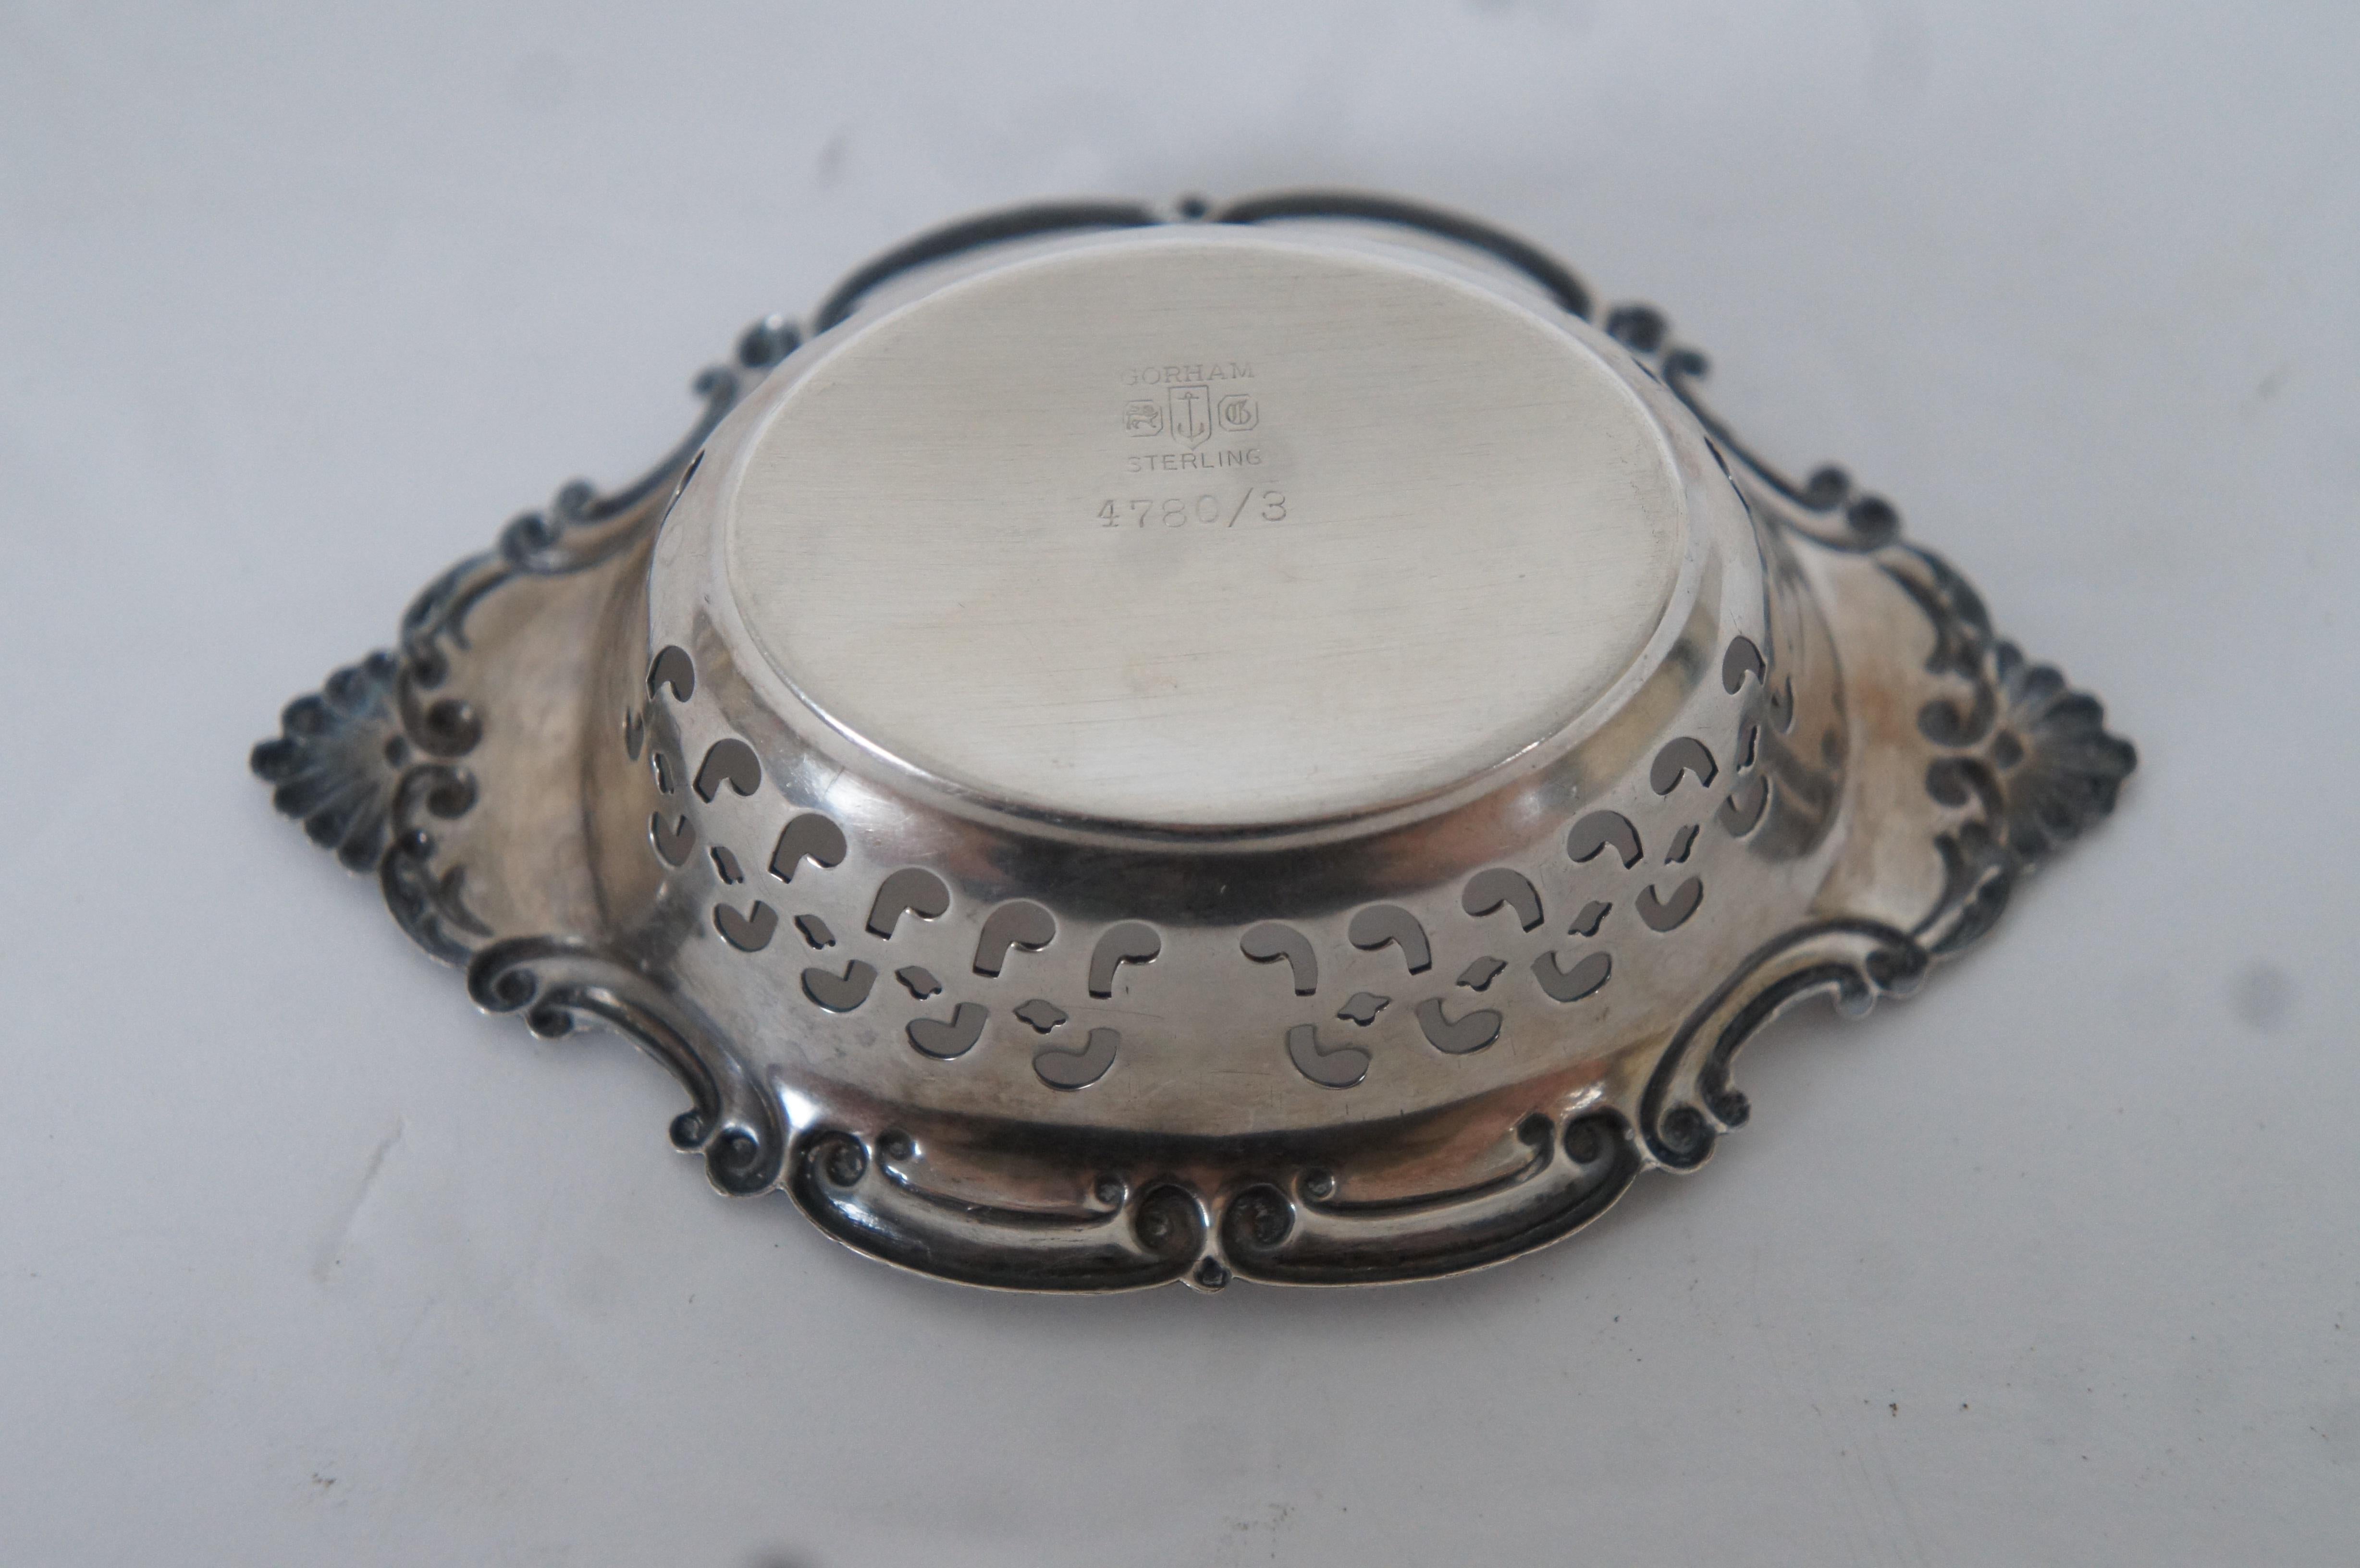 Vtg Gorham Sterling Silver 4780/3 Reticulated Scalloped Nut Bone Dish Mono 24g 6